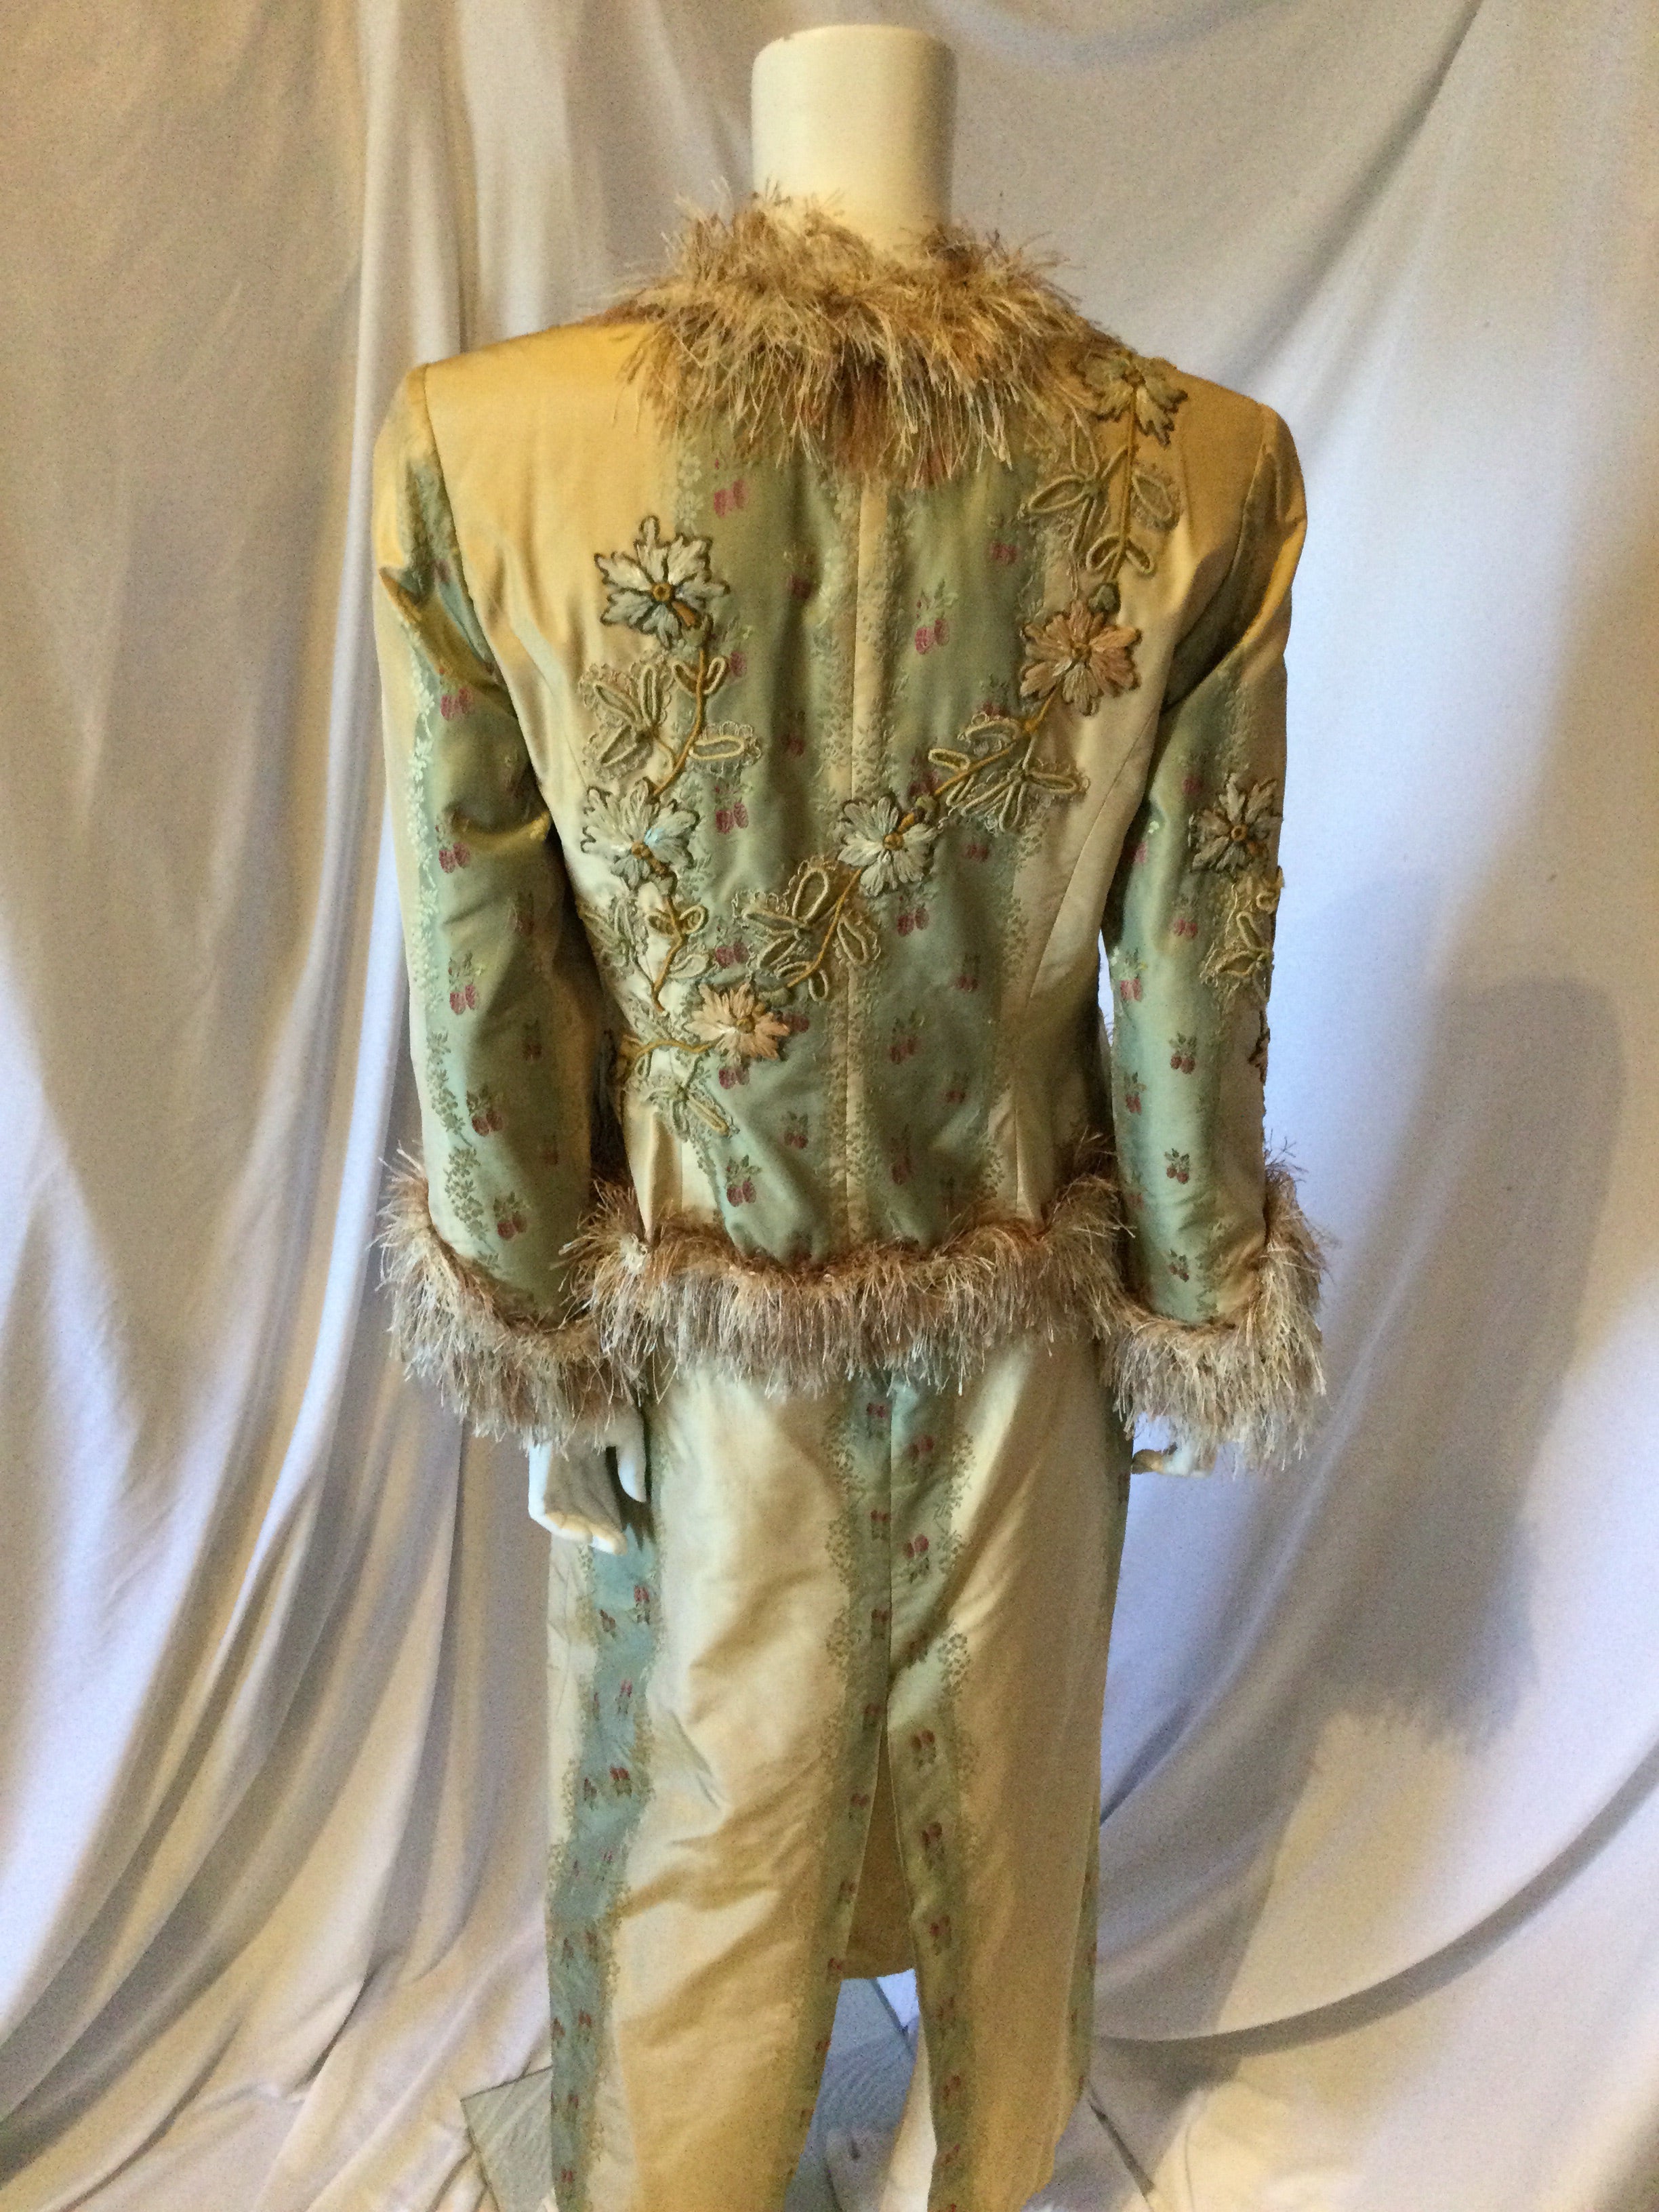 Wearable artistry in silk – The Denver Post